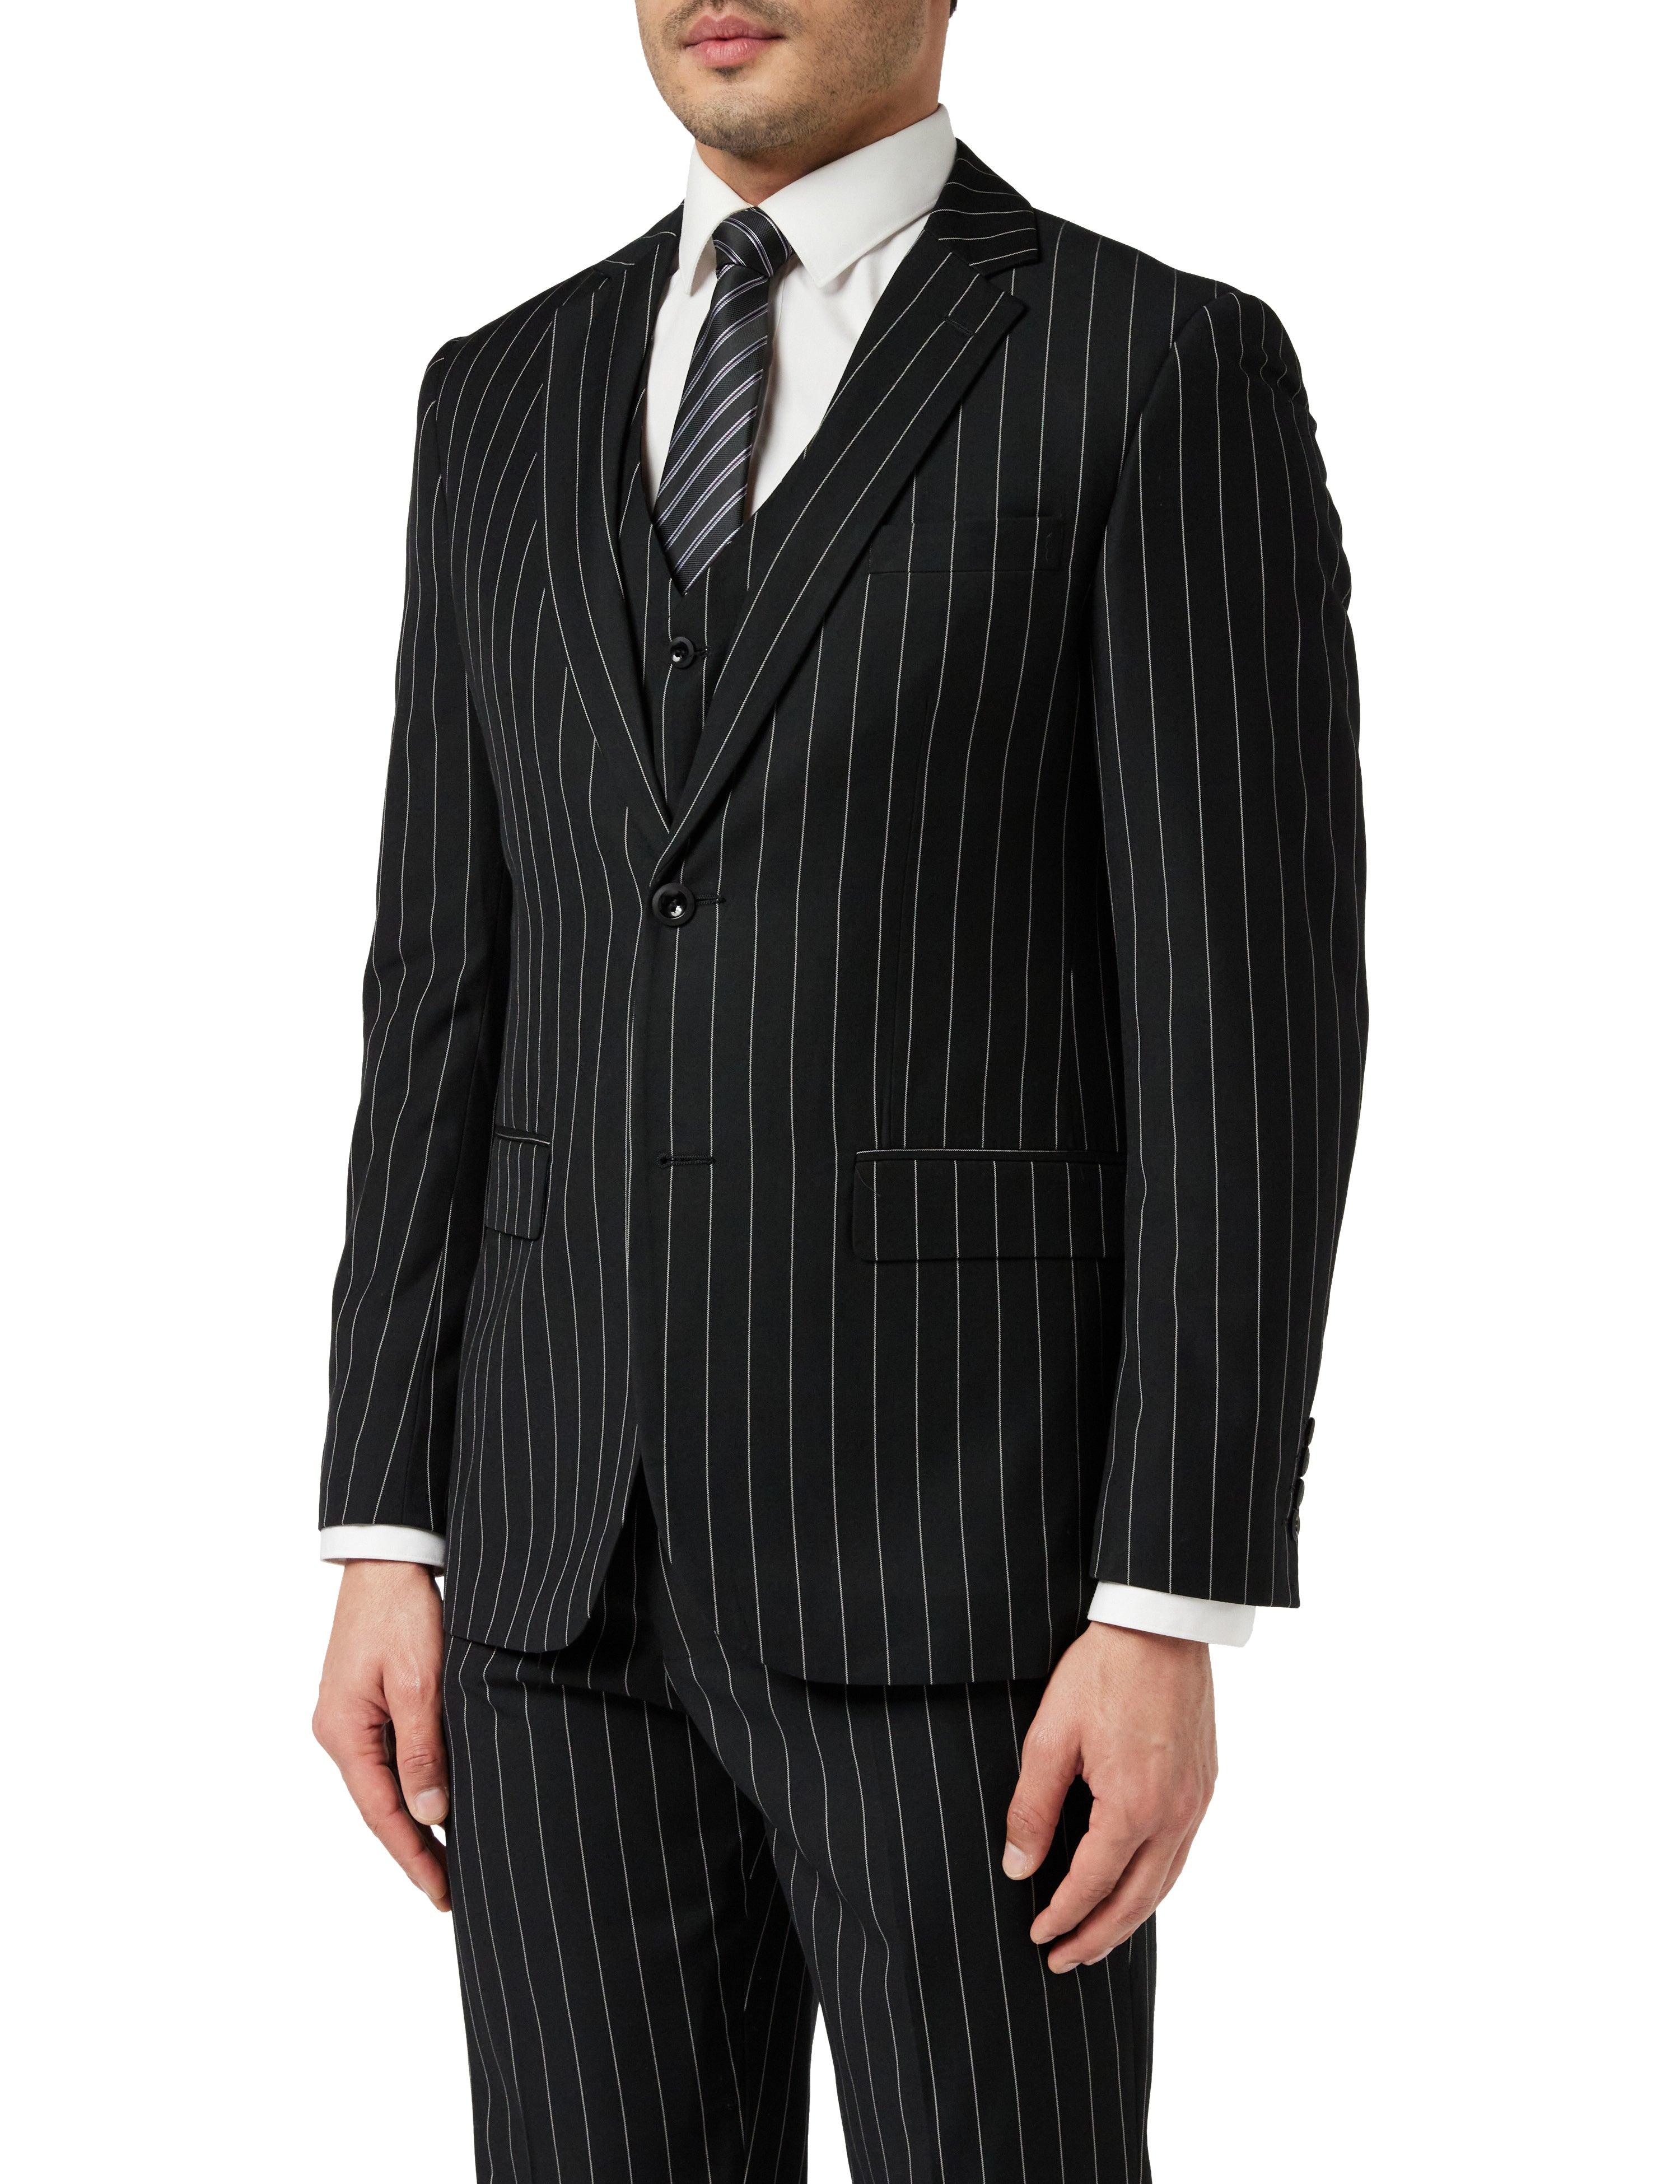 Classic Black & White Pinstripe Suit – XPOSED